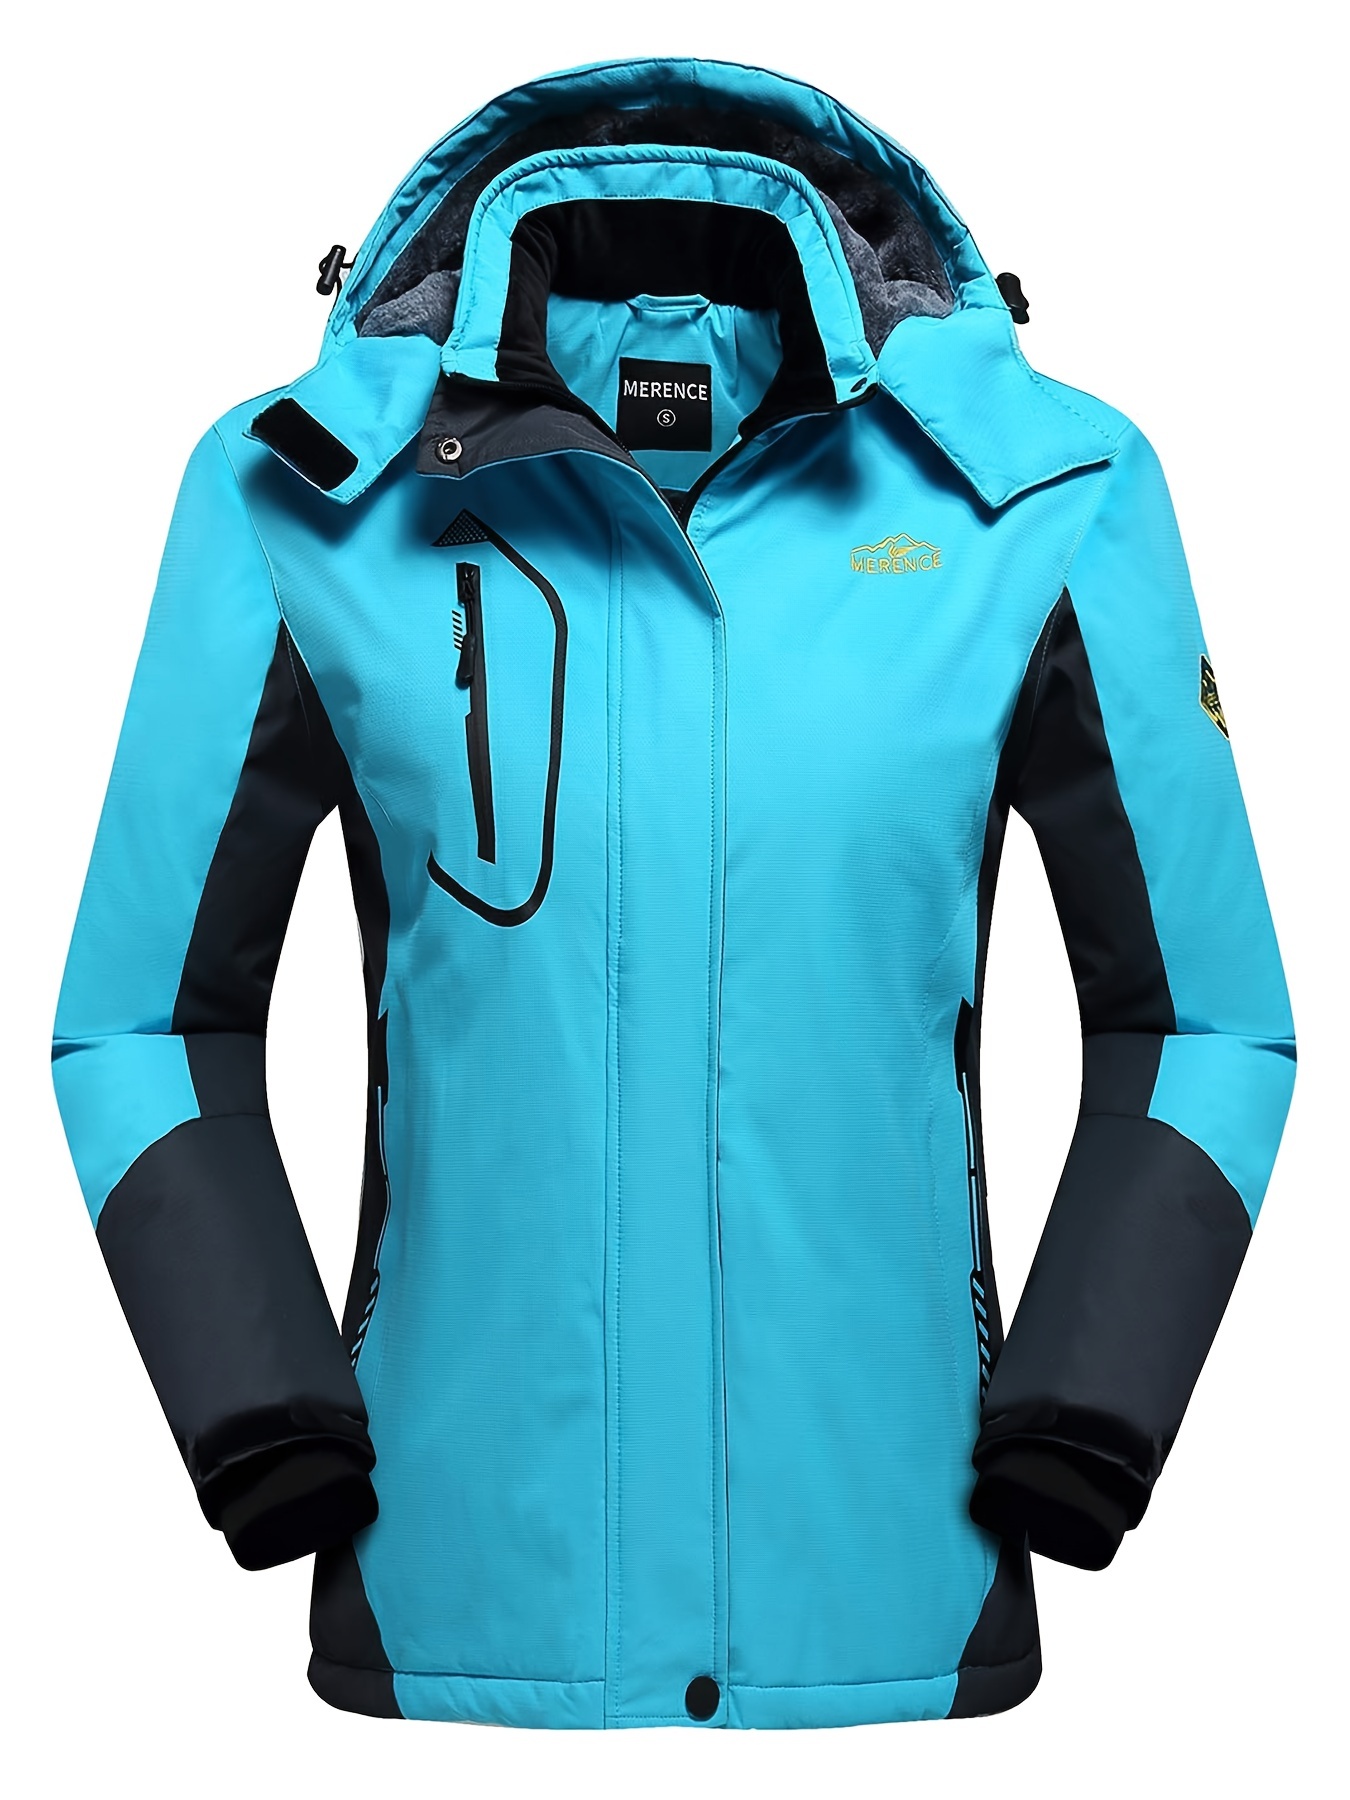 ZENITH M elegant and technical ski jacket